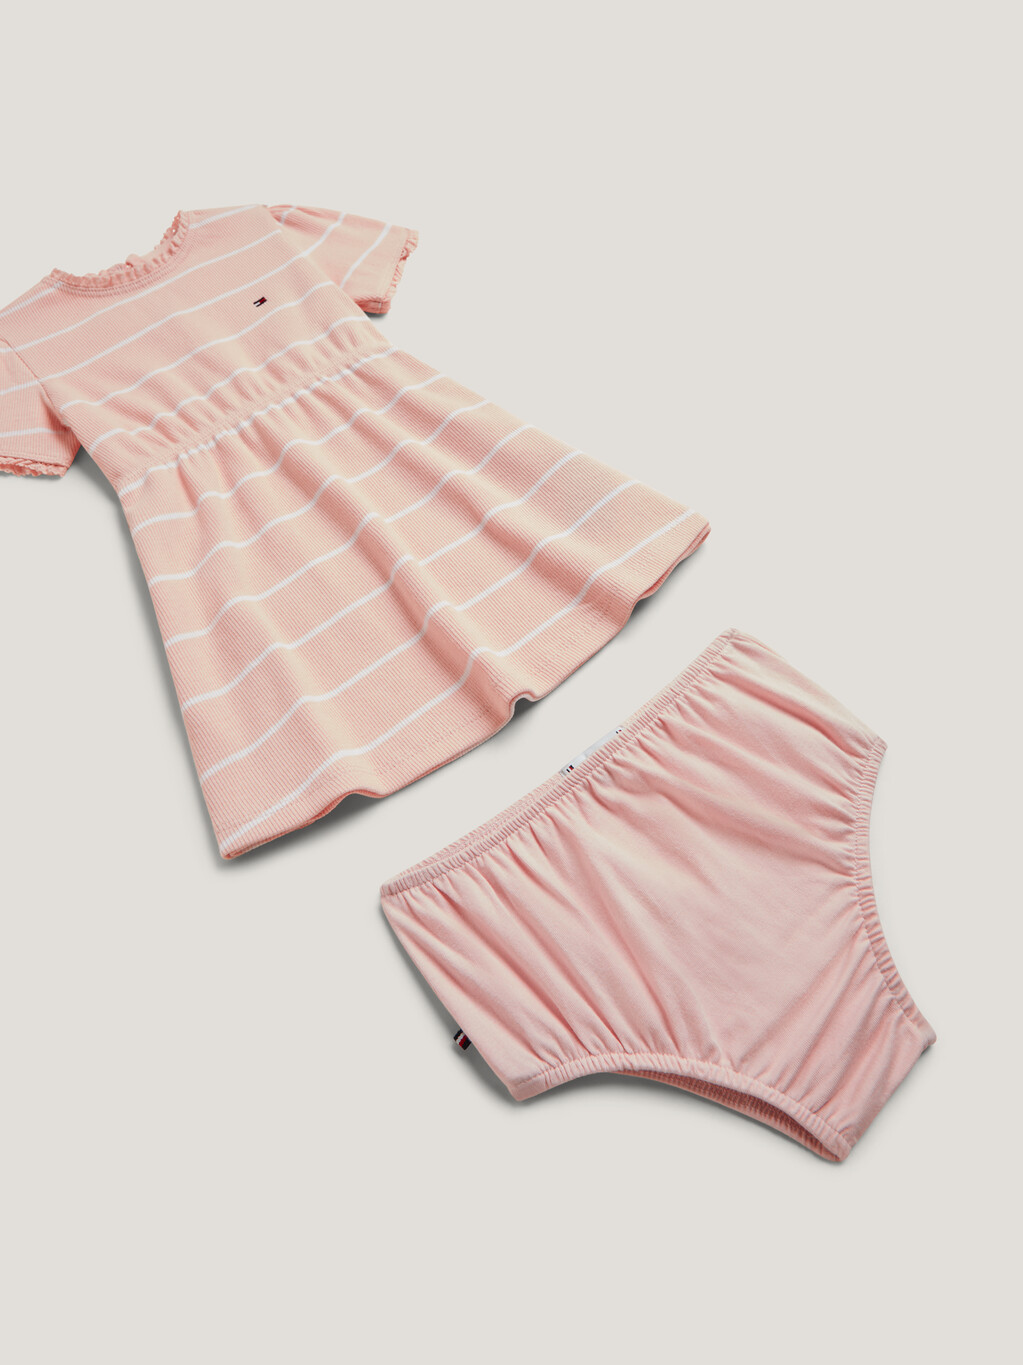 Baby Girl Stripe Dress, Whimsy Pink / White Stripe, hi-res